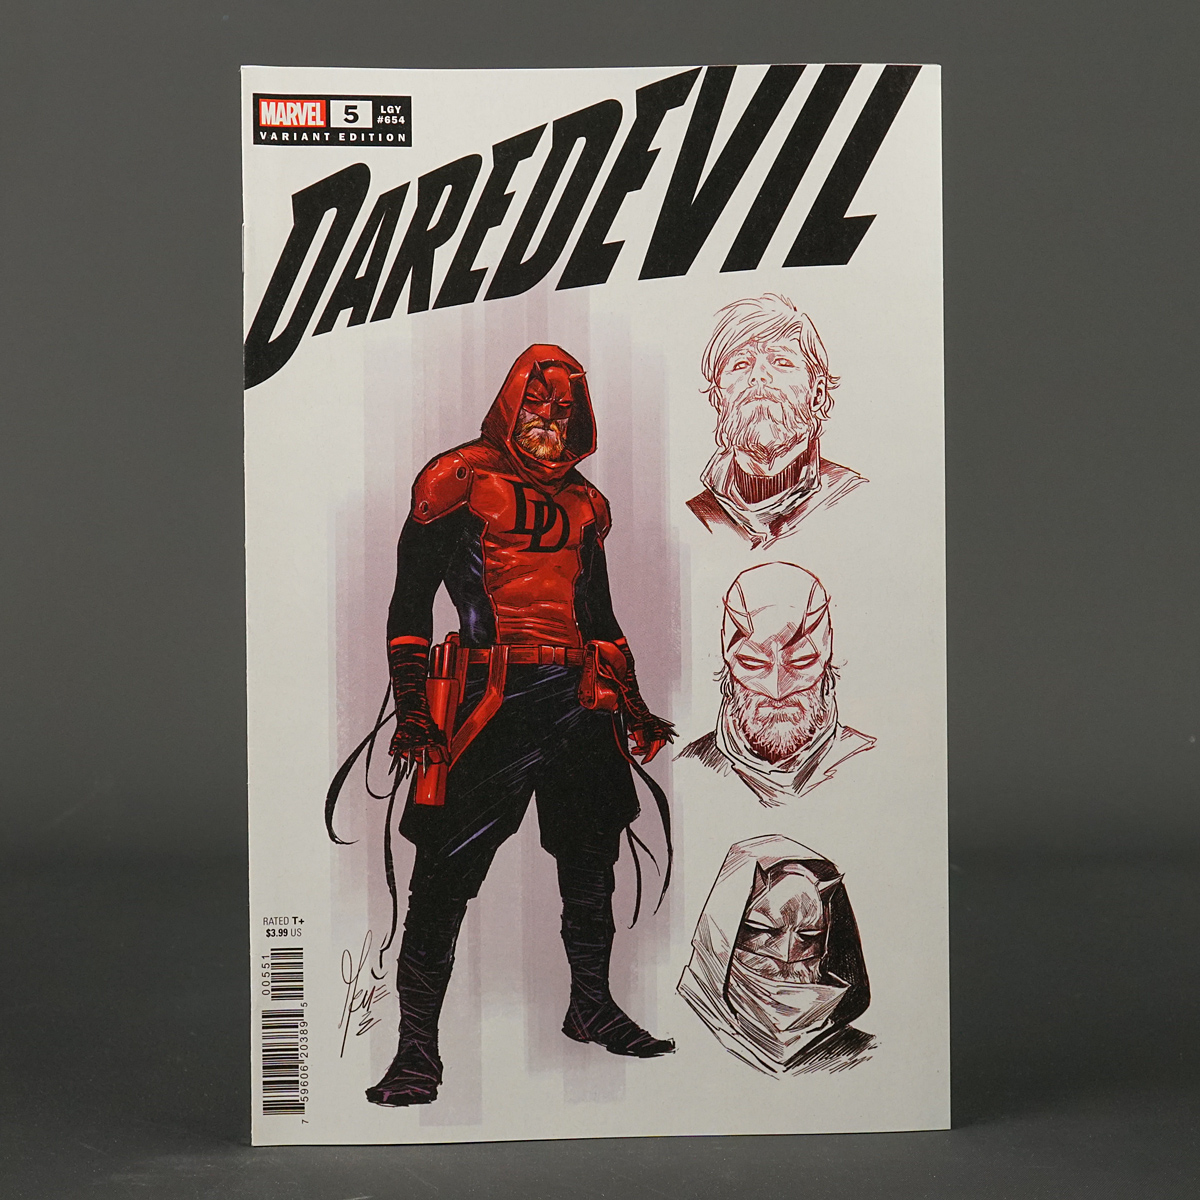 DAREDEVIL #5 var 1:10 design Marvel Comics 2022 SEP221030 (CA) Checchetto